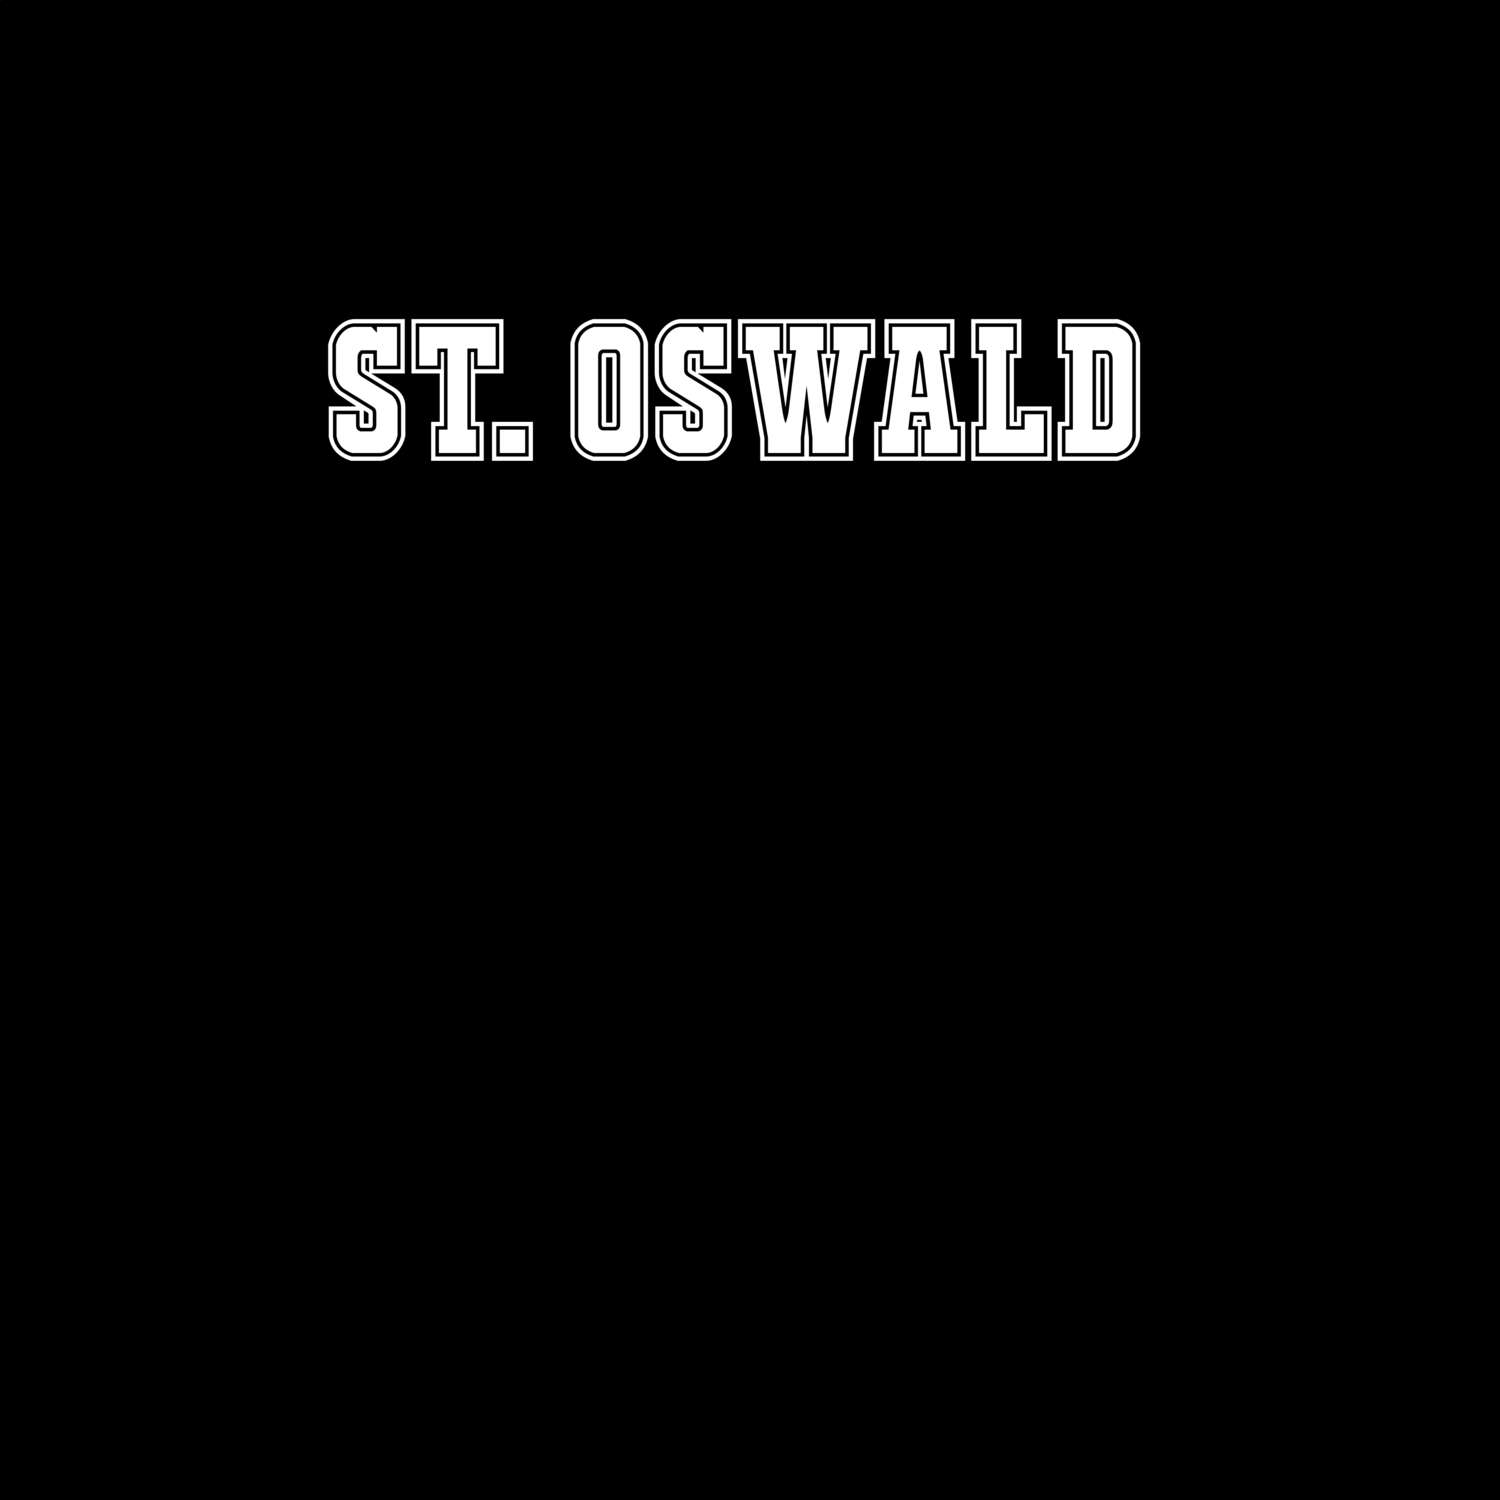 St. Oswald T-Shirt »Classic«